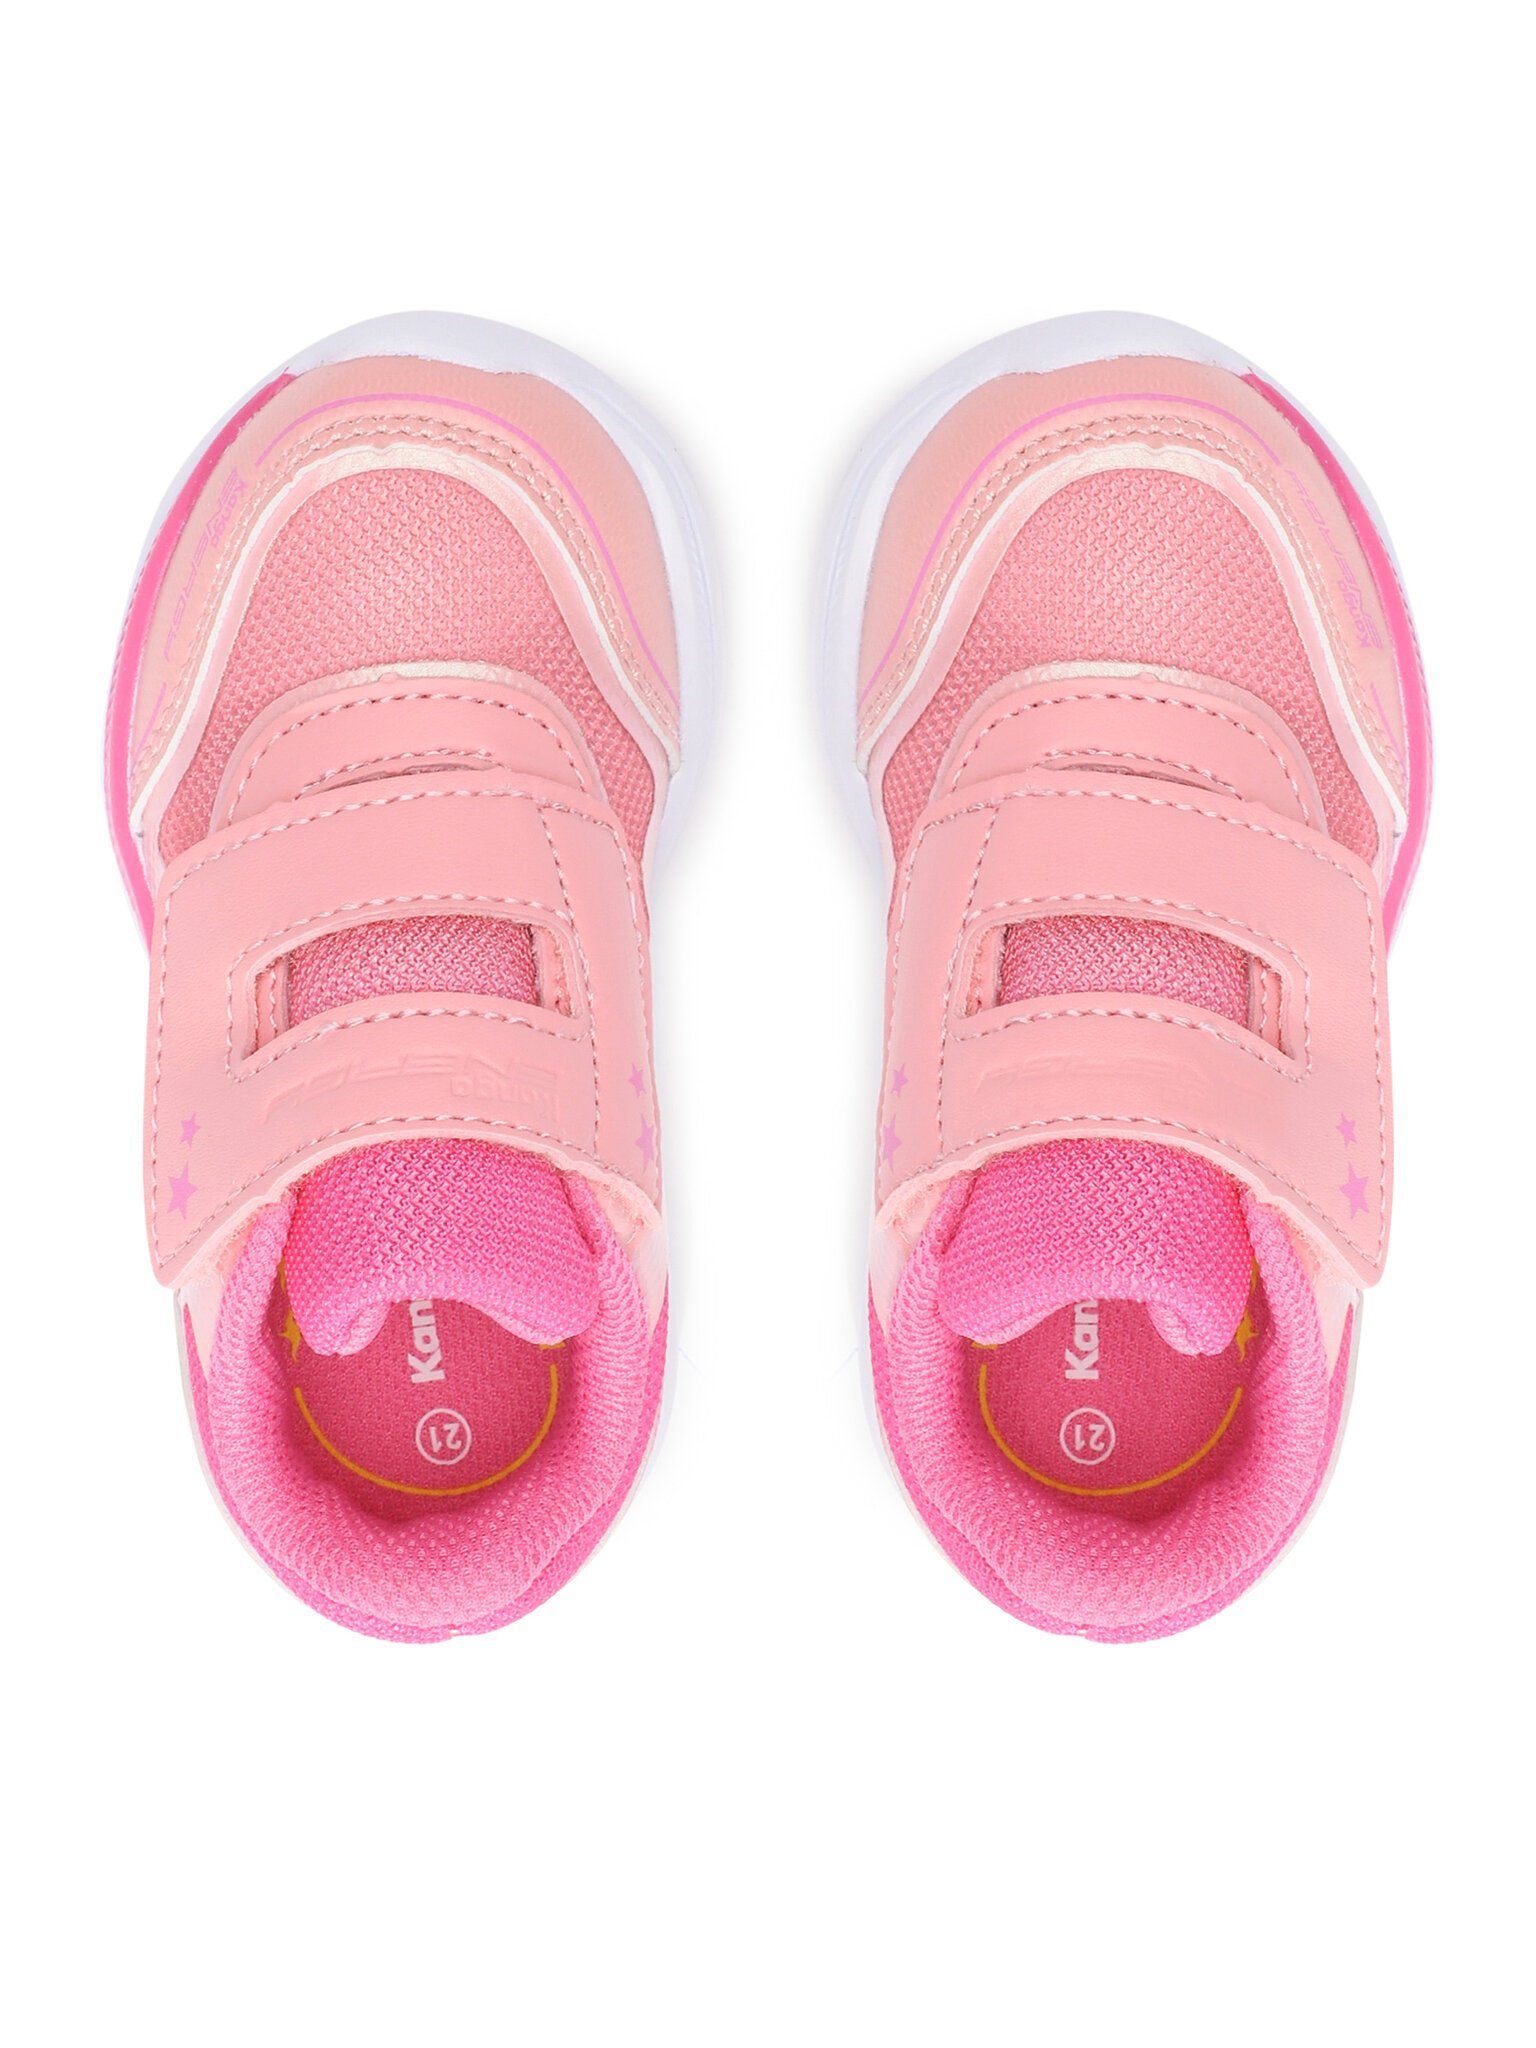 KangaROOS Sneakers K-Iq Stuke V 00002 000 6355 M Neon Pink/Rose Sneaker